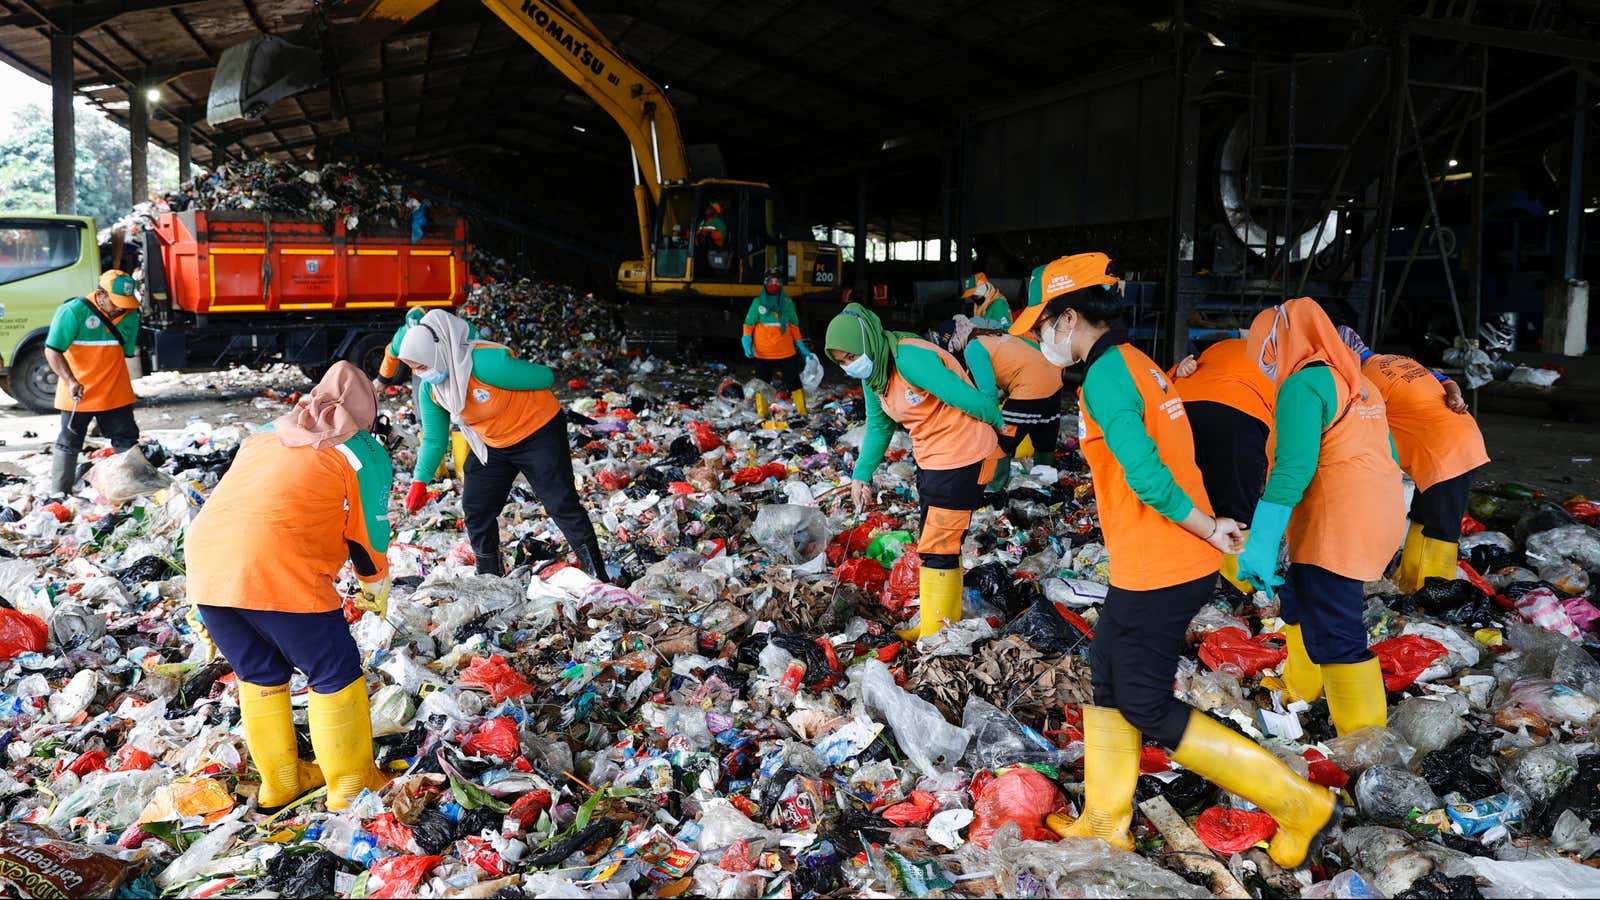 Workers sort the trash at Bantar Gebang landfill in Bekasi, West Java province, Indonesia, August 12, 2021.